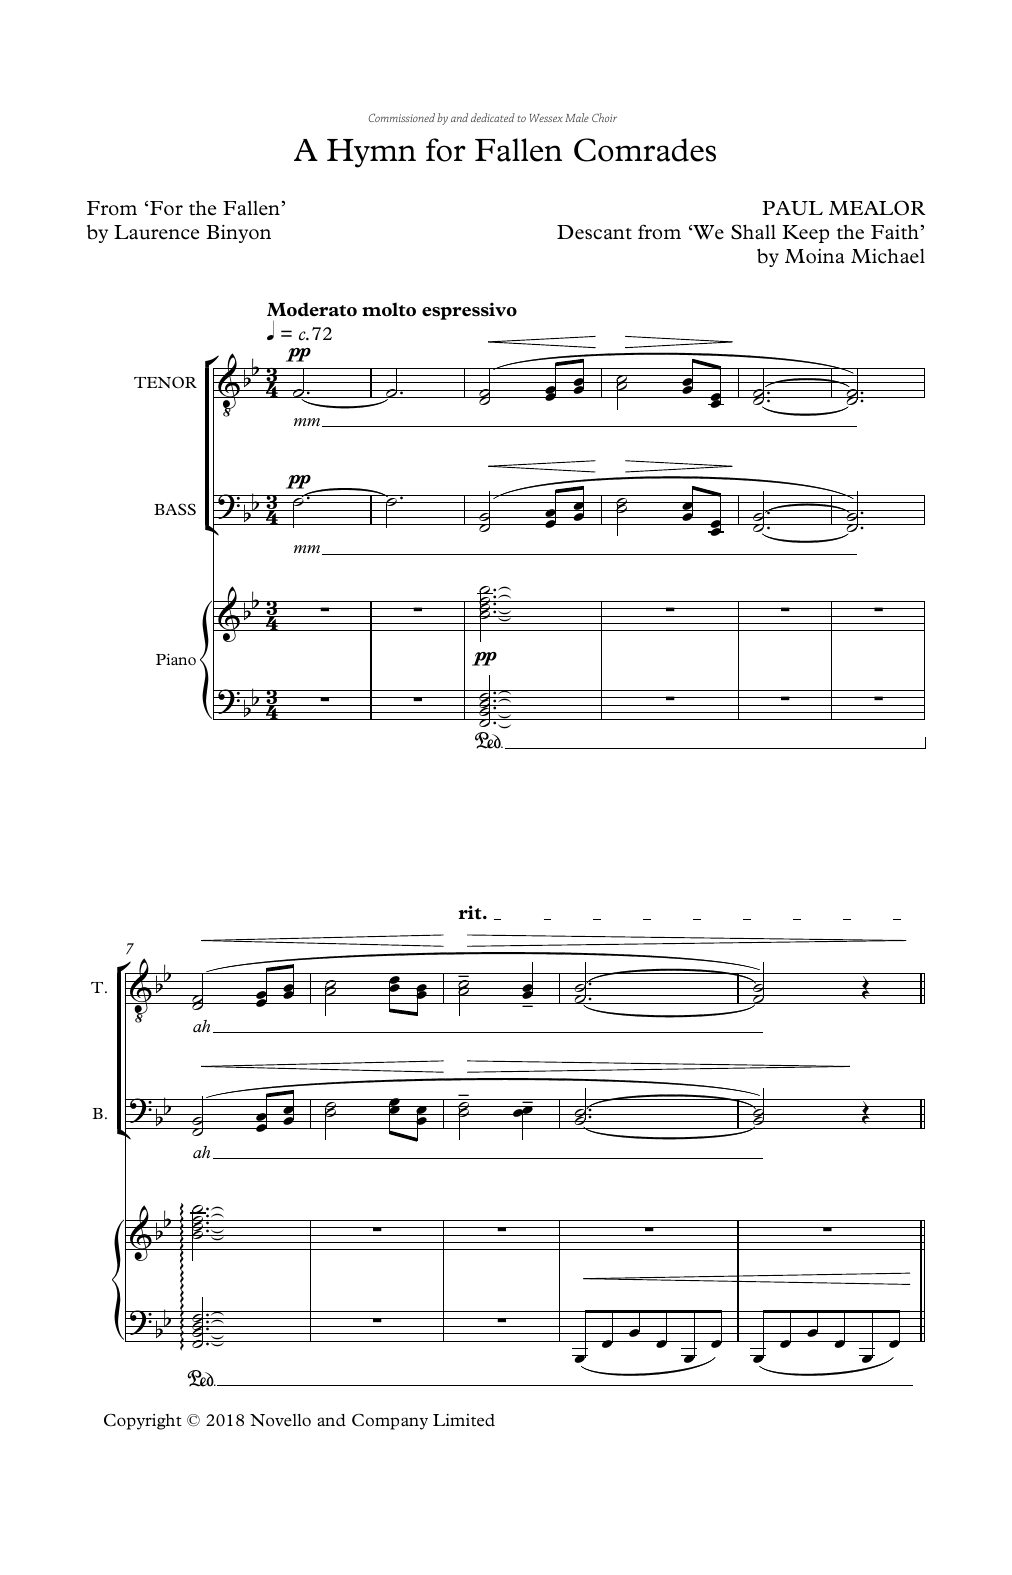 Paul Mealor A Hymn For Fallen Comrades Sheet Music Notes & Chords for TTBB Choir - Download or Print PDF